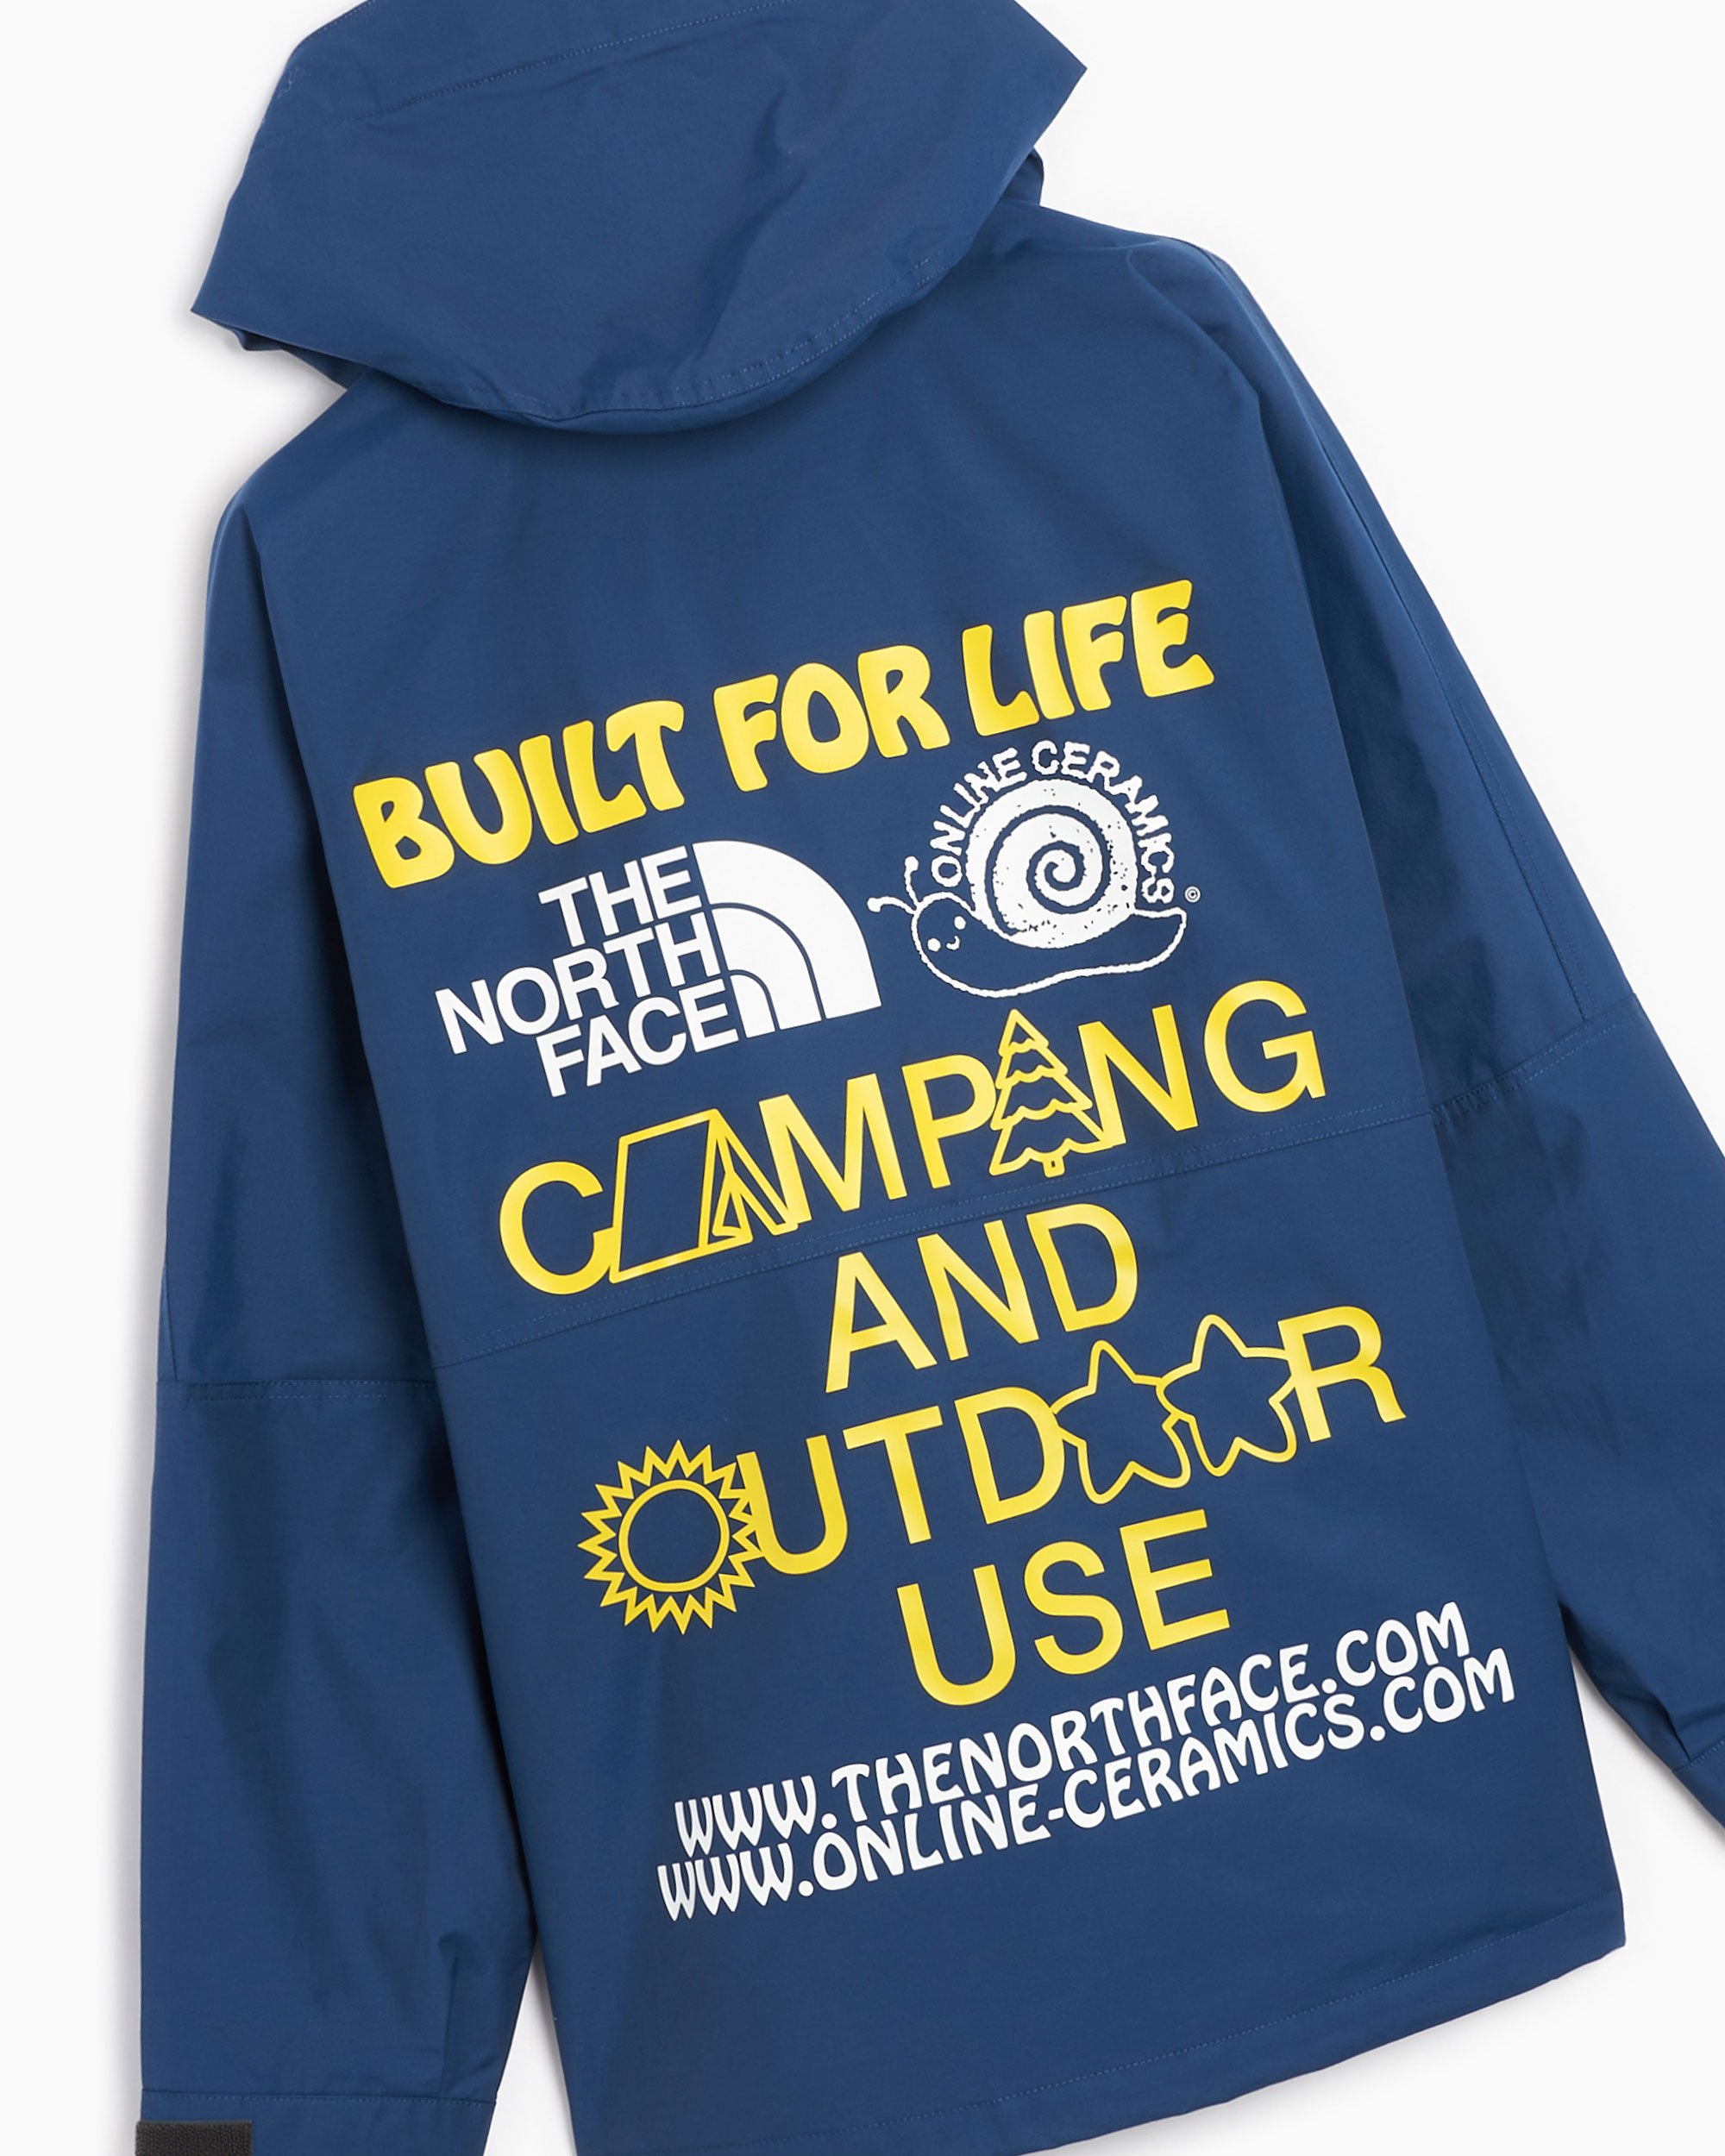 The North Face x Online Ceramics Windjammer Men's Pullover Jacket